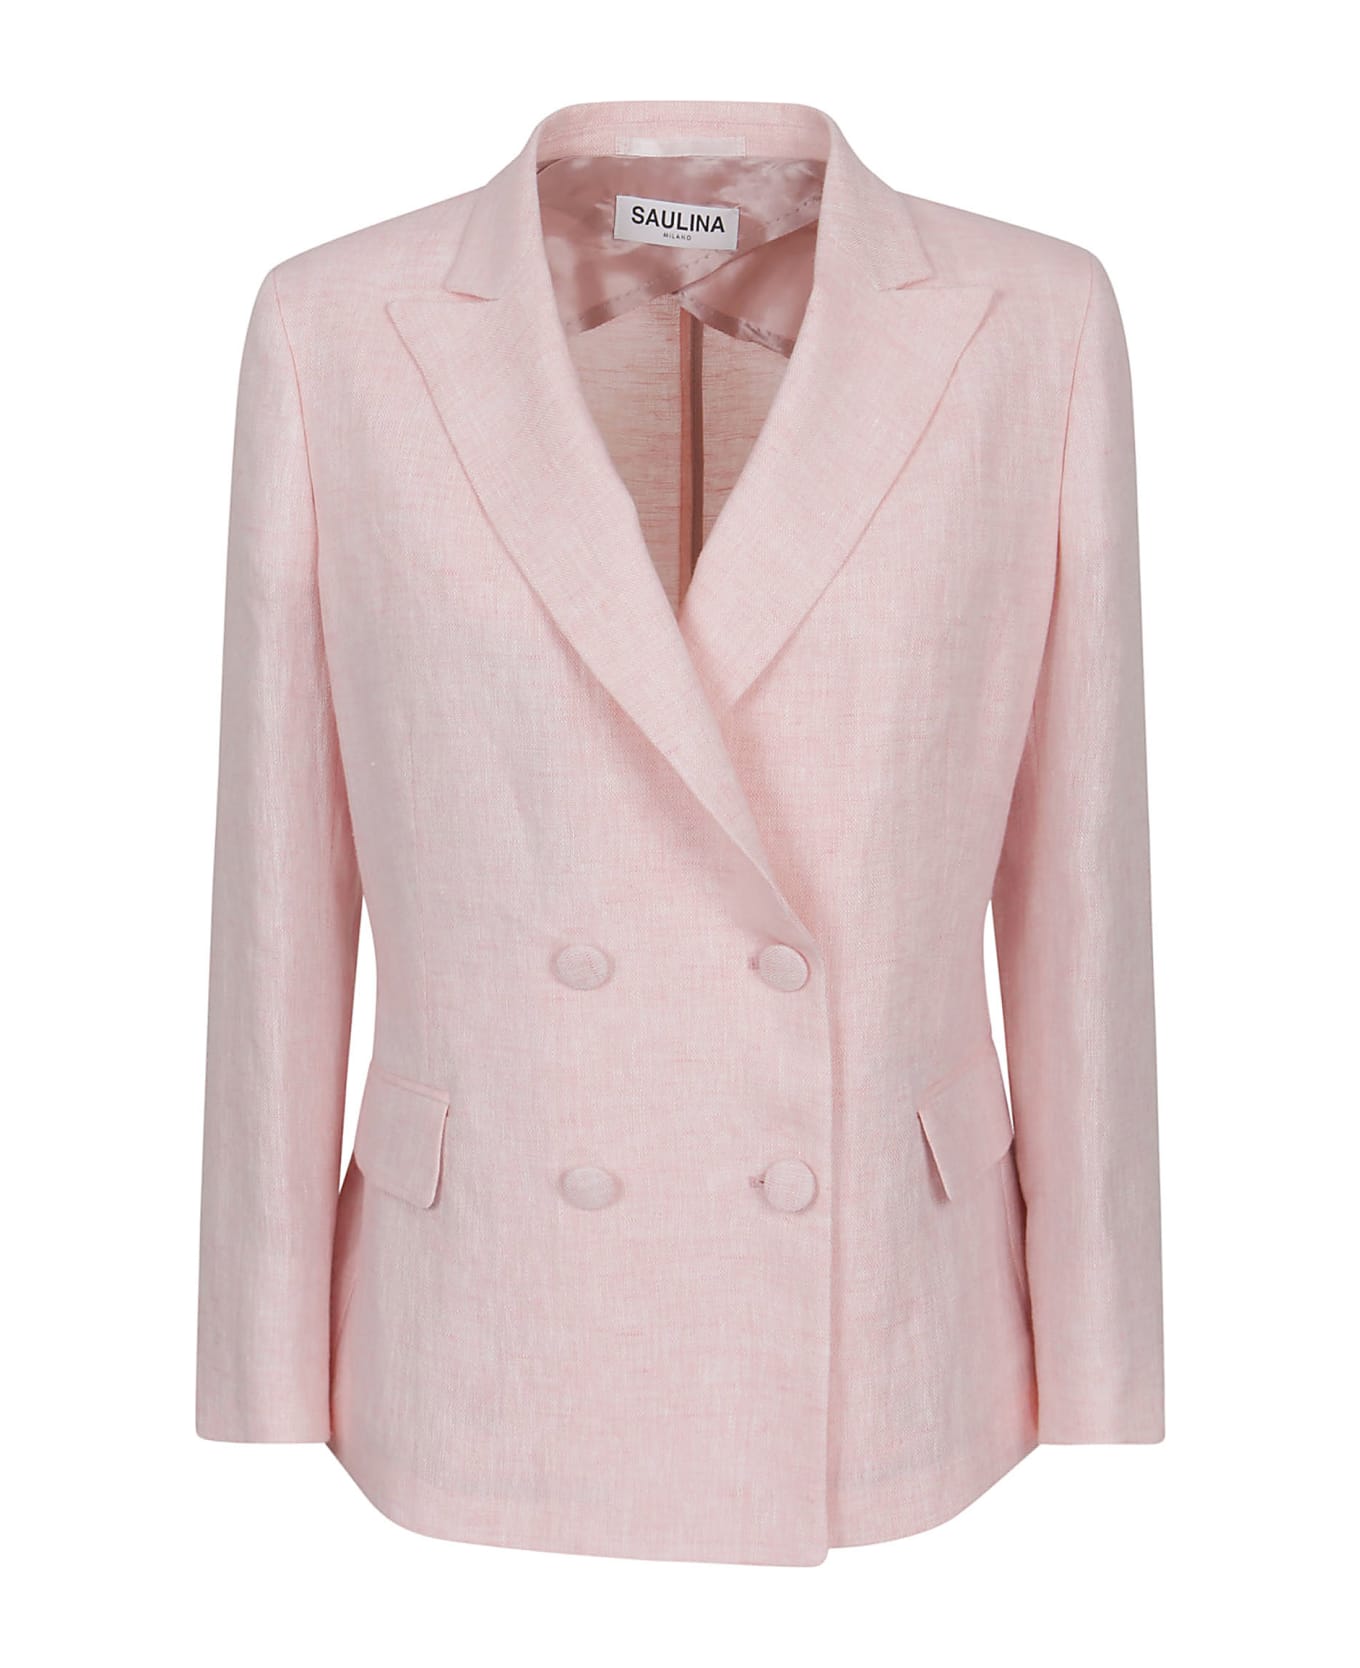 Saulina Milano Antonella Jacket - Pink